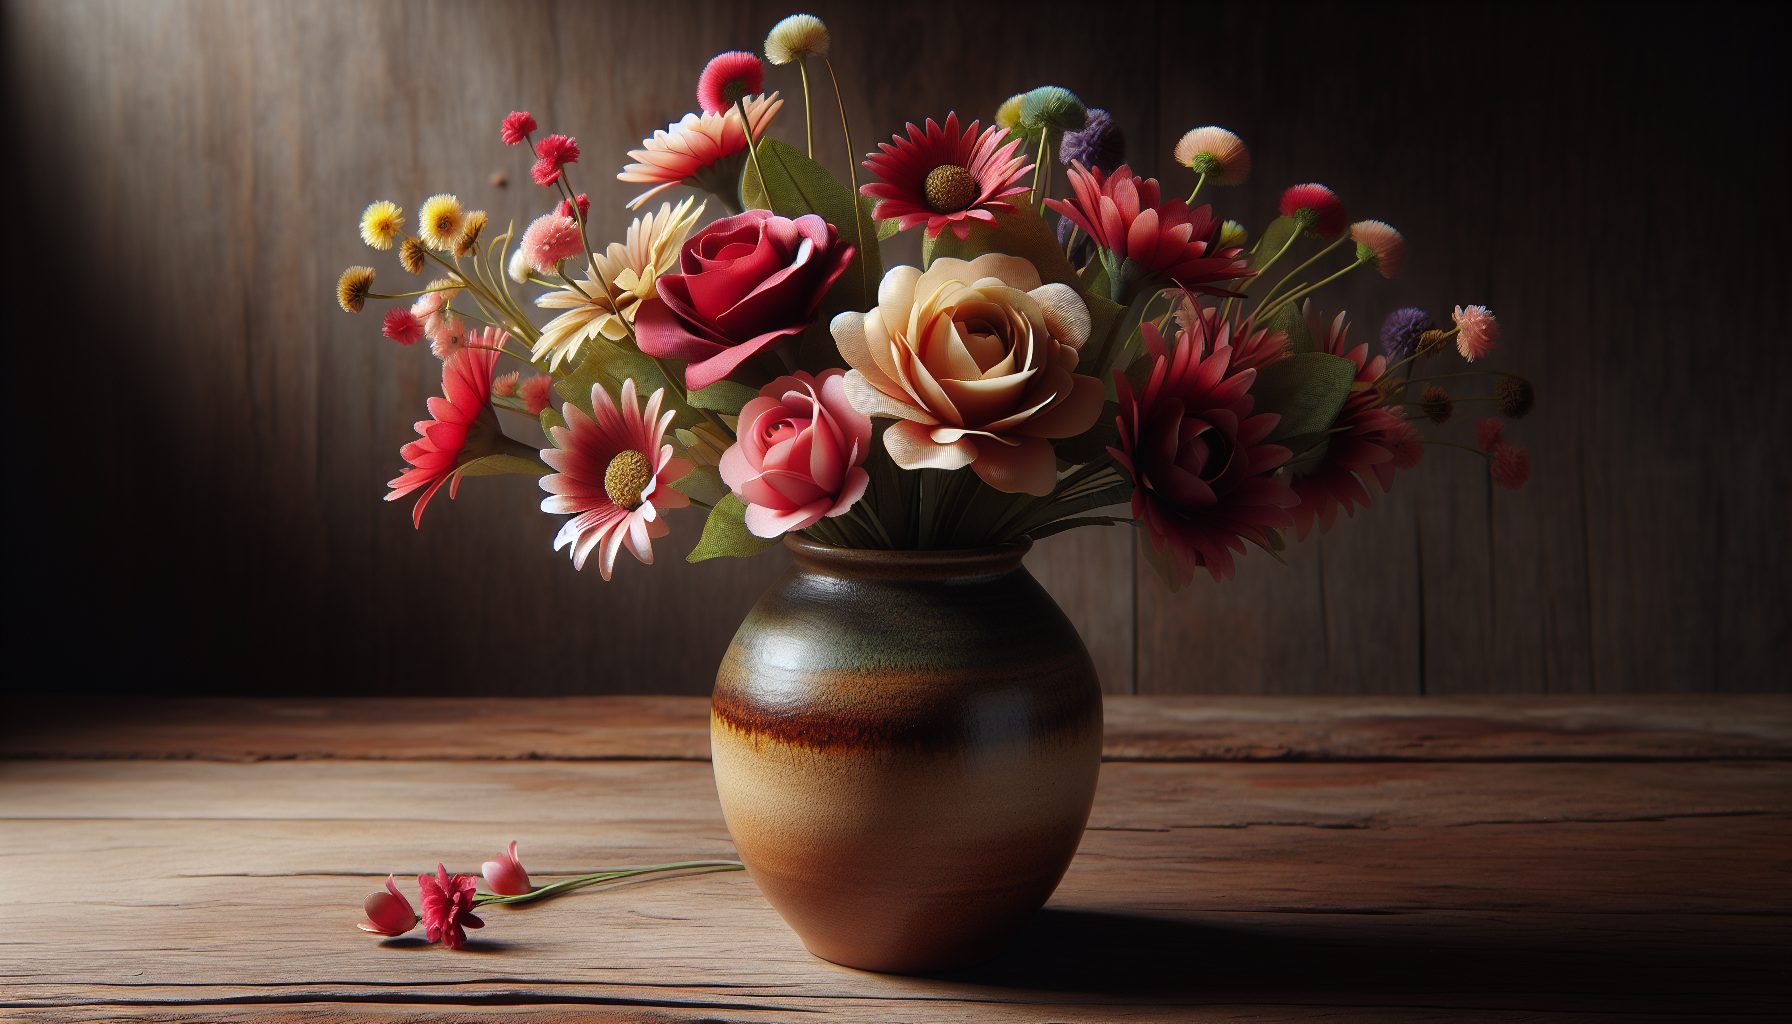 Artificial flowers in a ceramic vase